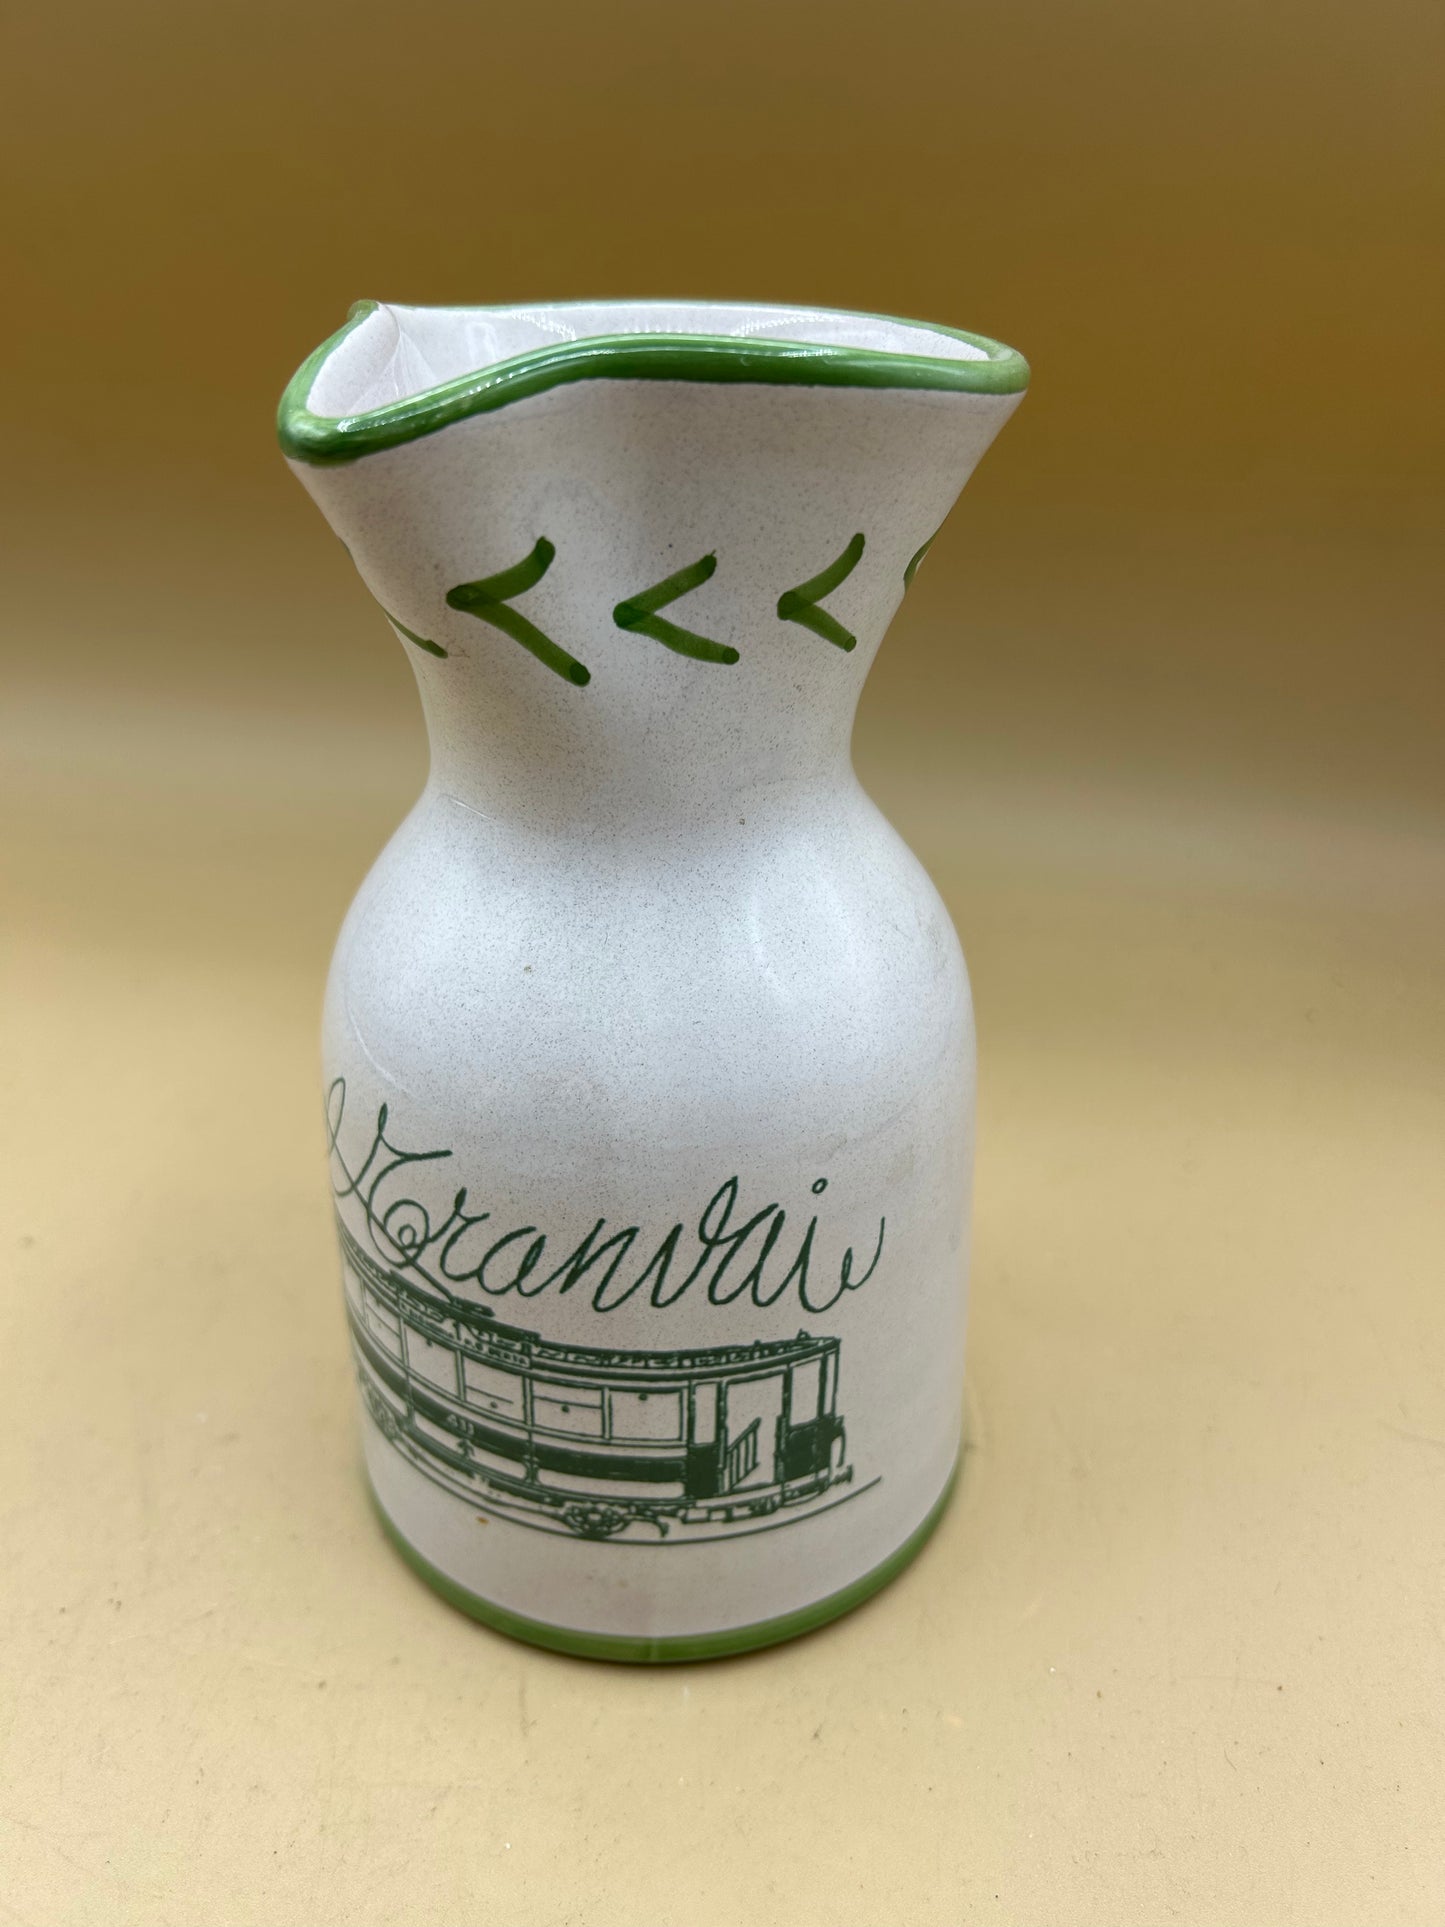 Tramvai Torretti Deruta ceramic jug hand painted bottle for water or wine with tram design